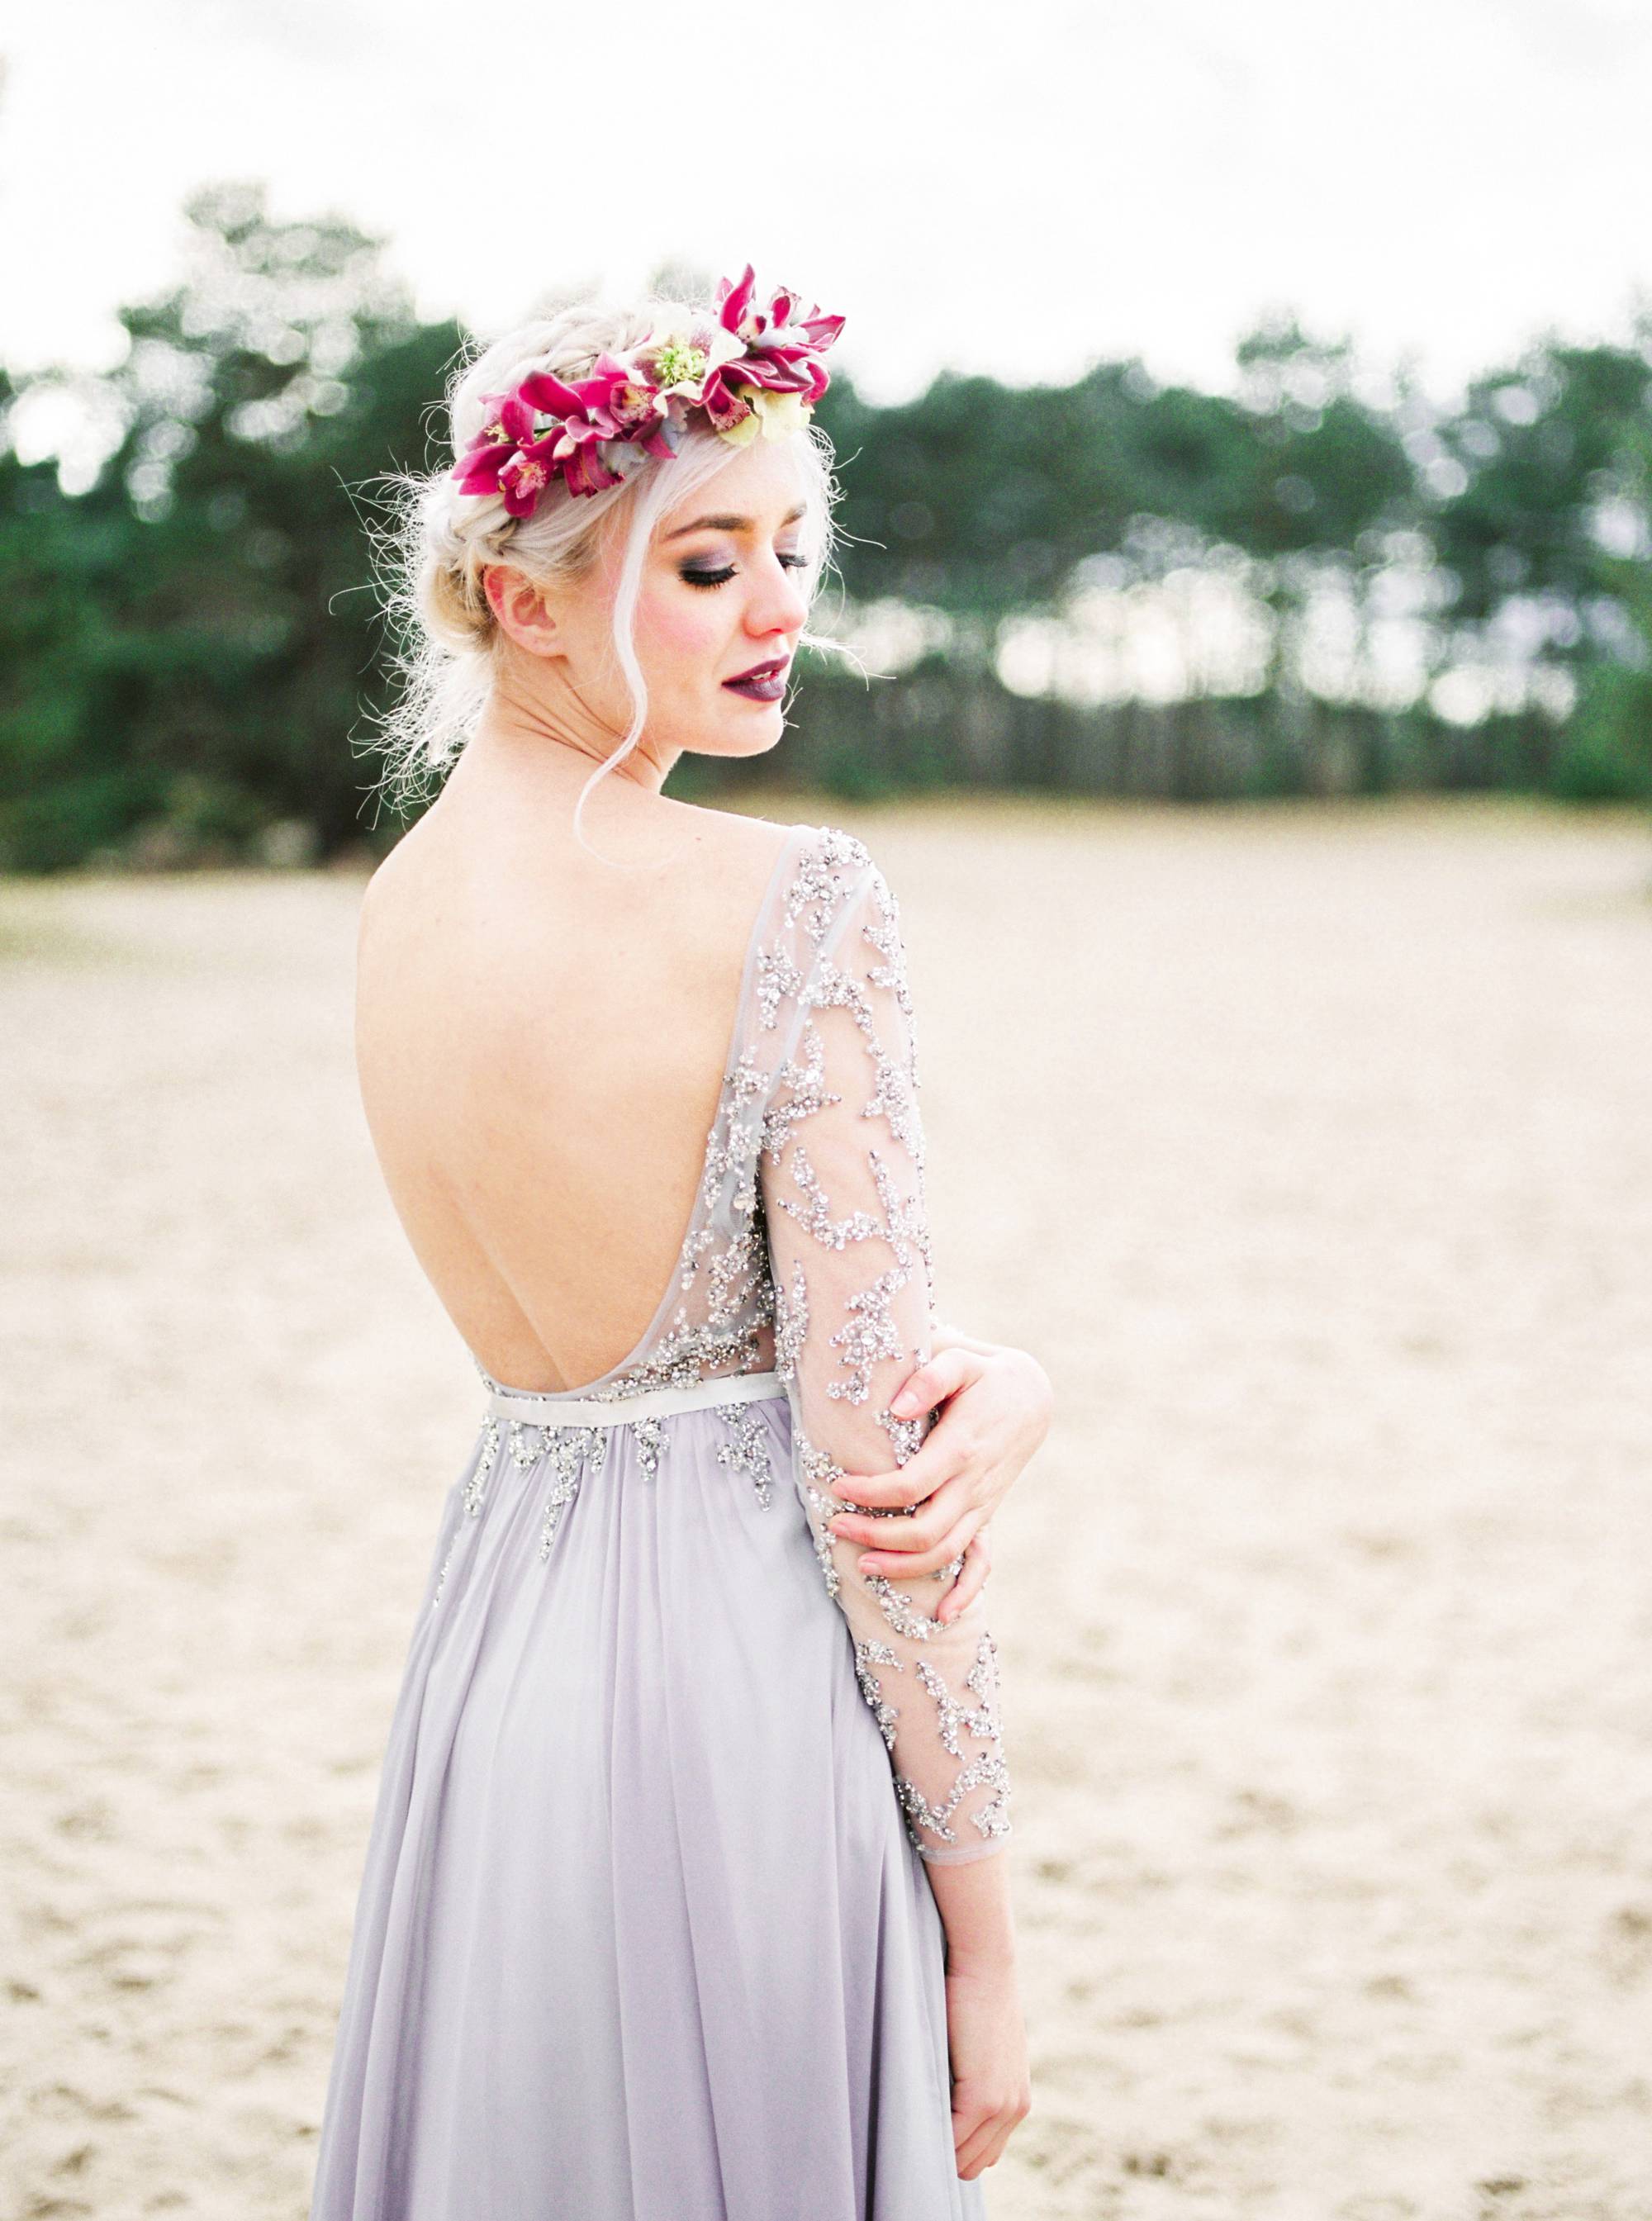 Wedding photographer Netherlands - Pastel wedding dress